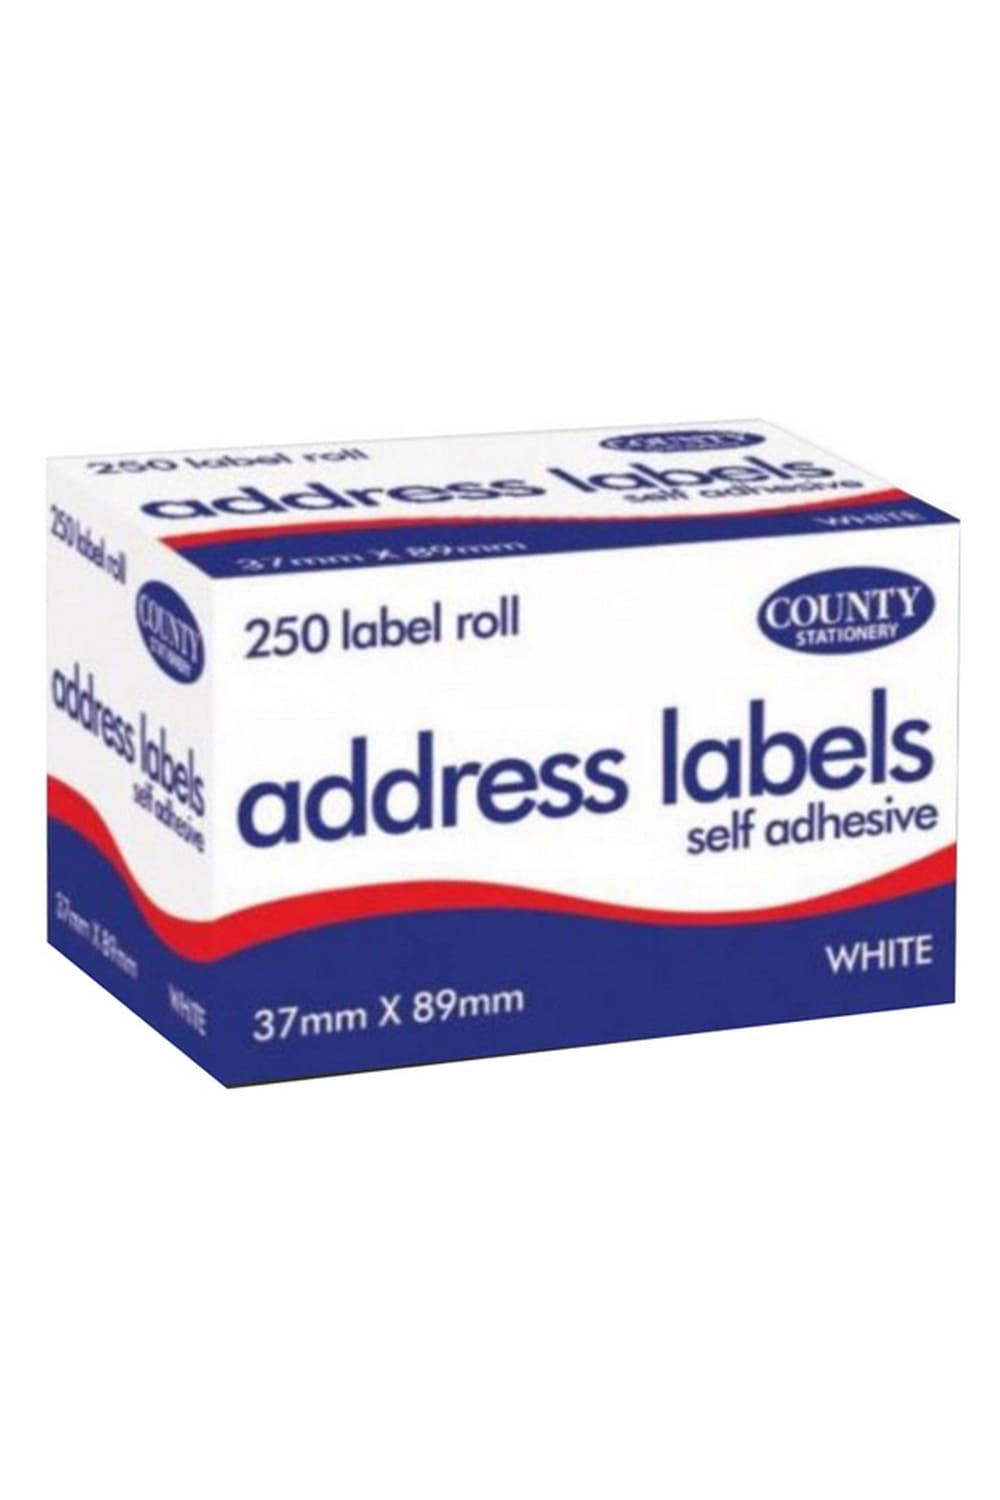 White Self Adhesive Address Labels - White